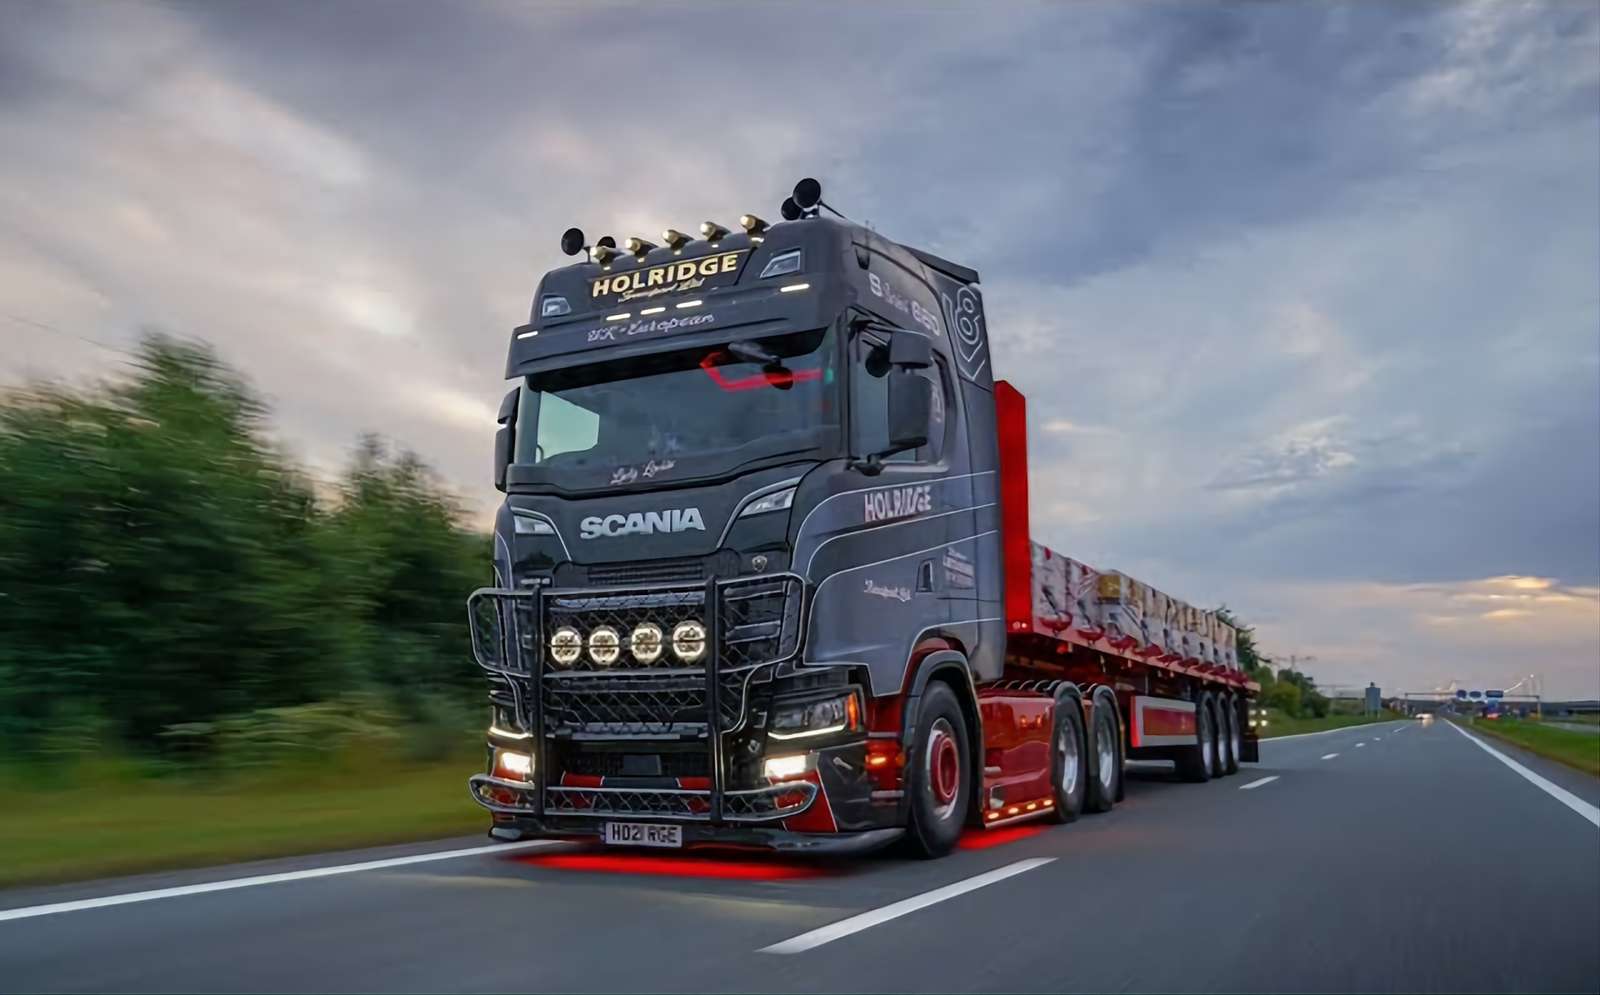 Holridge Scania V8 Online-Puzzle vom Foto